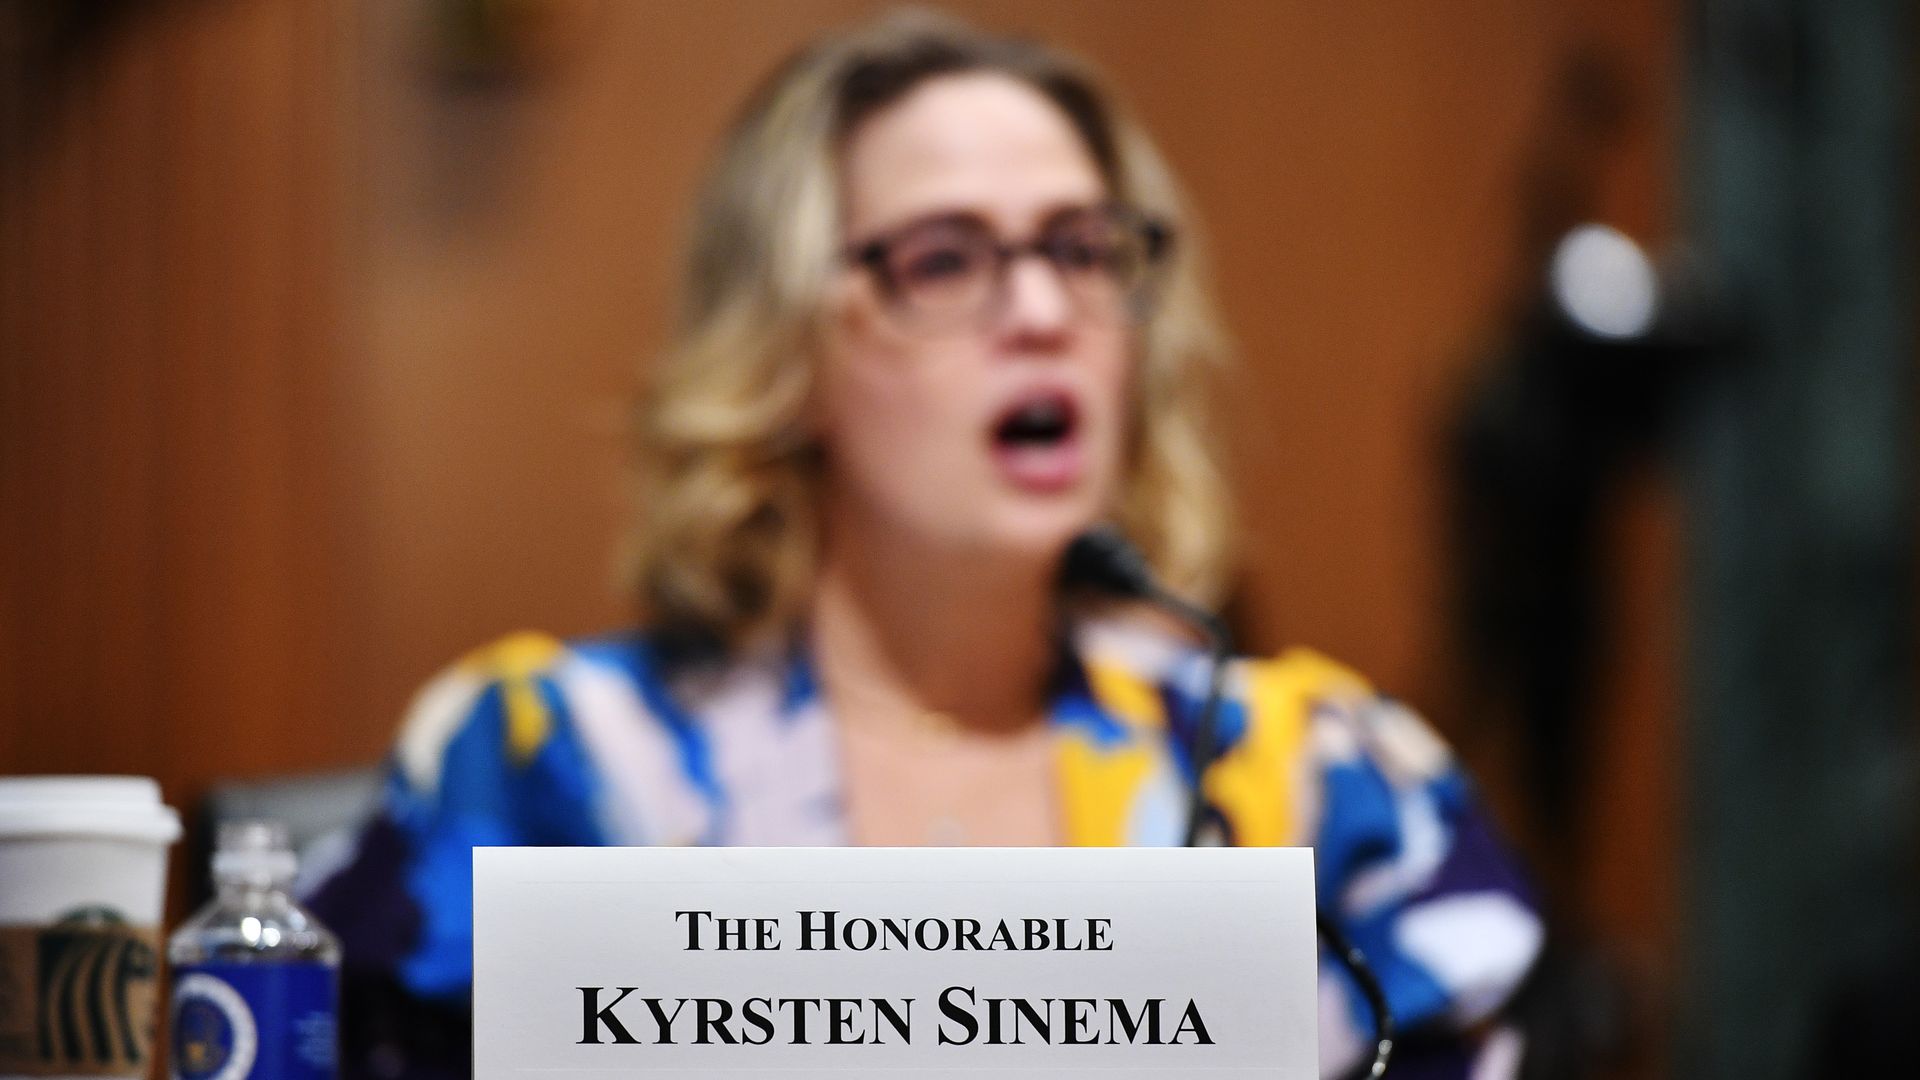 Sen. Kyrsten Sinema is seen speaking on Tuesday.